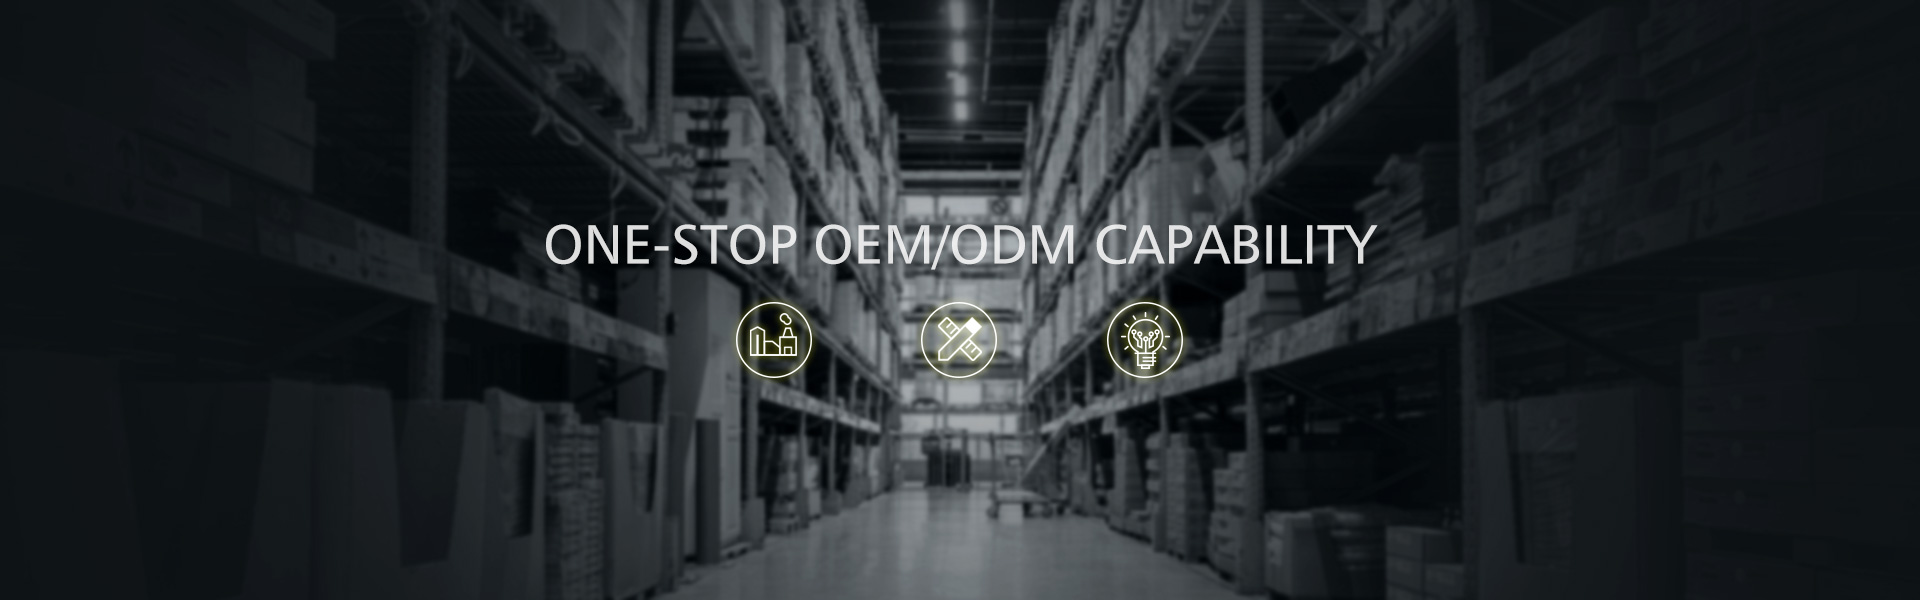 ONE-STOP OEM/ODM CAPABILITY